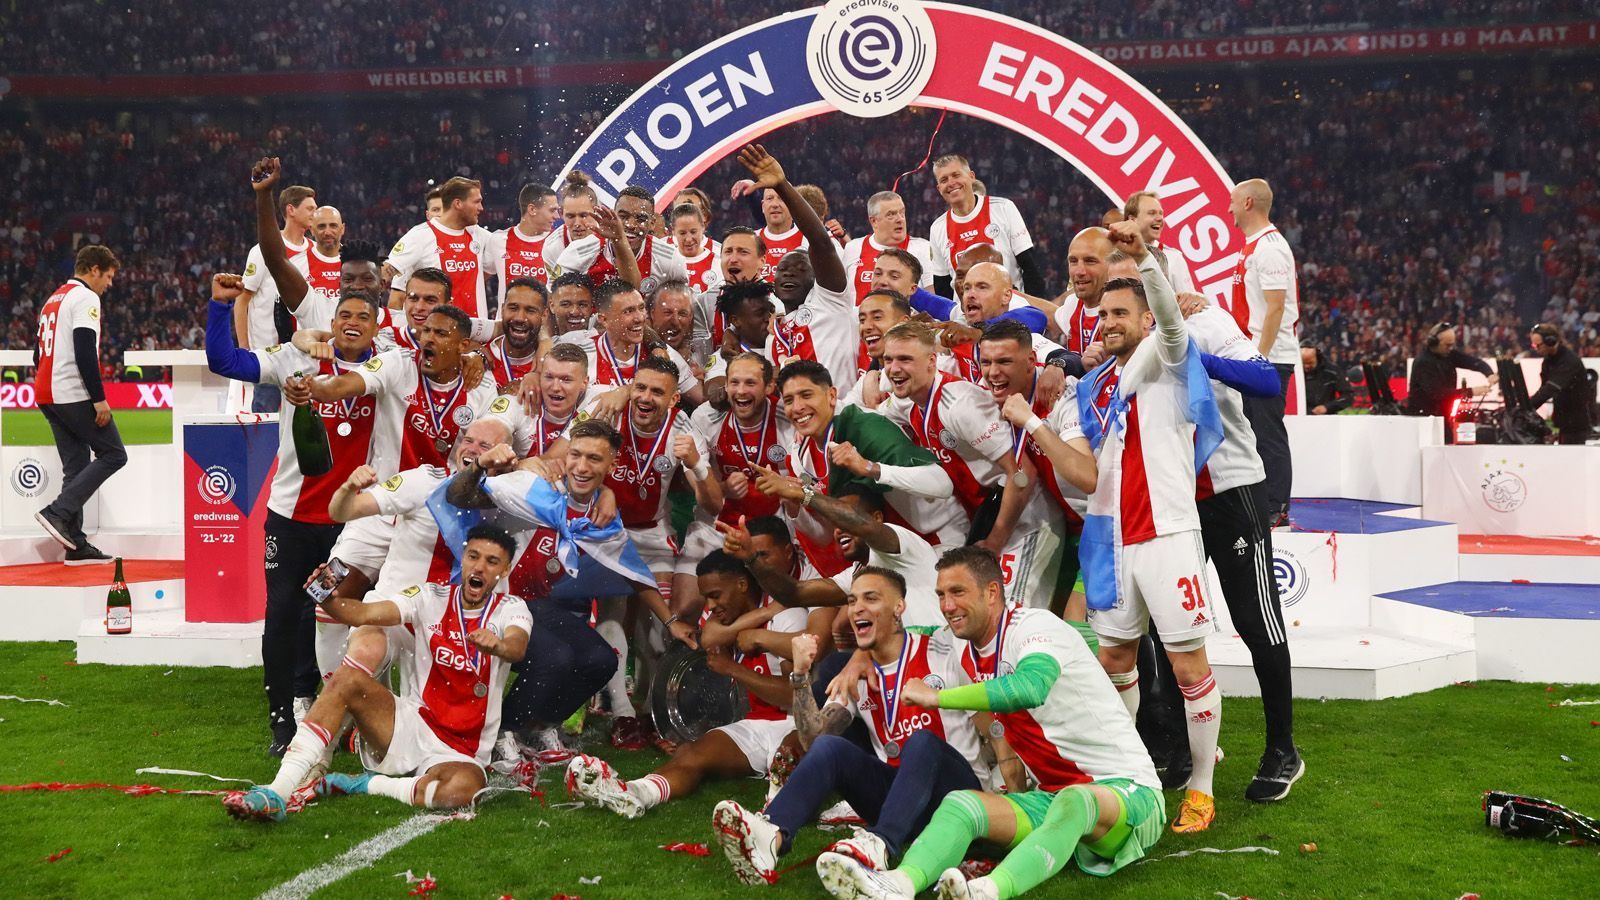 
                <strong>Topf 1</strong><br>
                Ajax Amsterdam - Meister in den Niederlanden
              